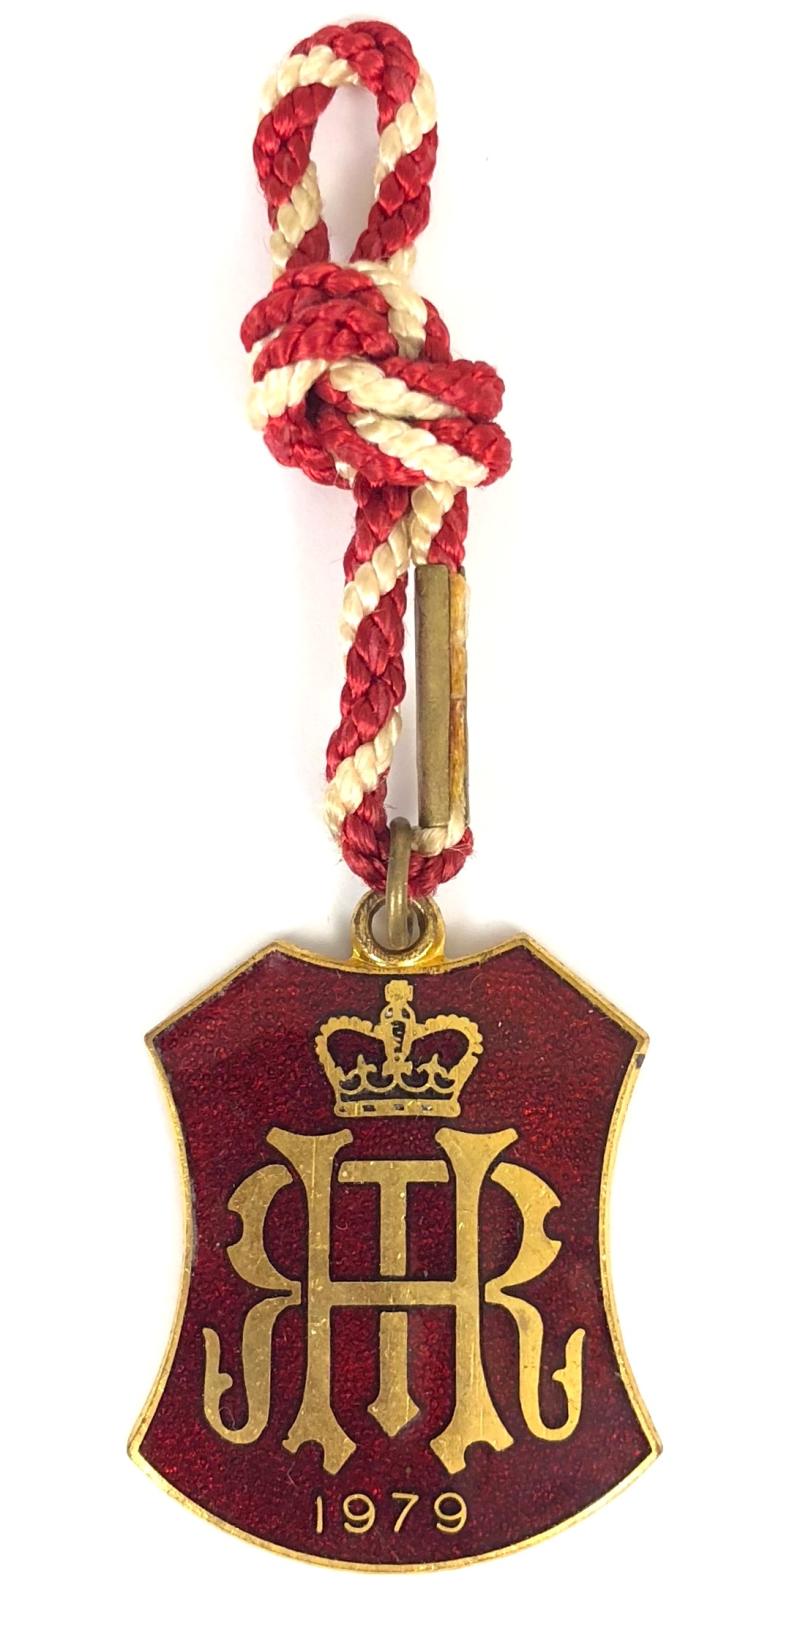 1979 Henley Royal Regatta stewards enclosure badge